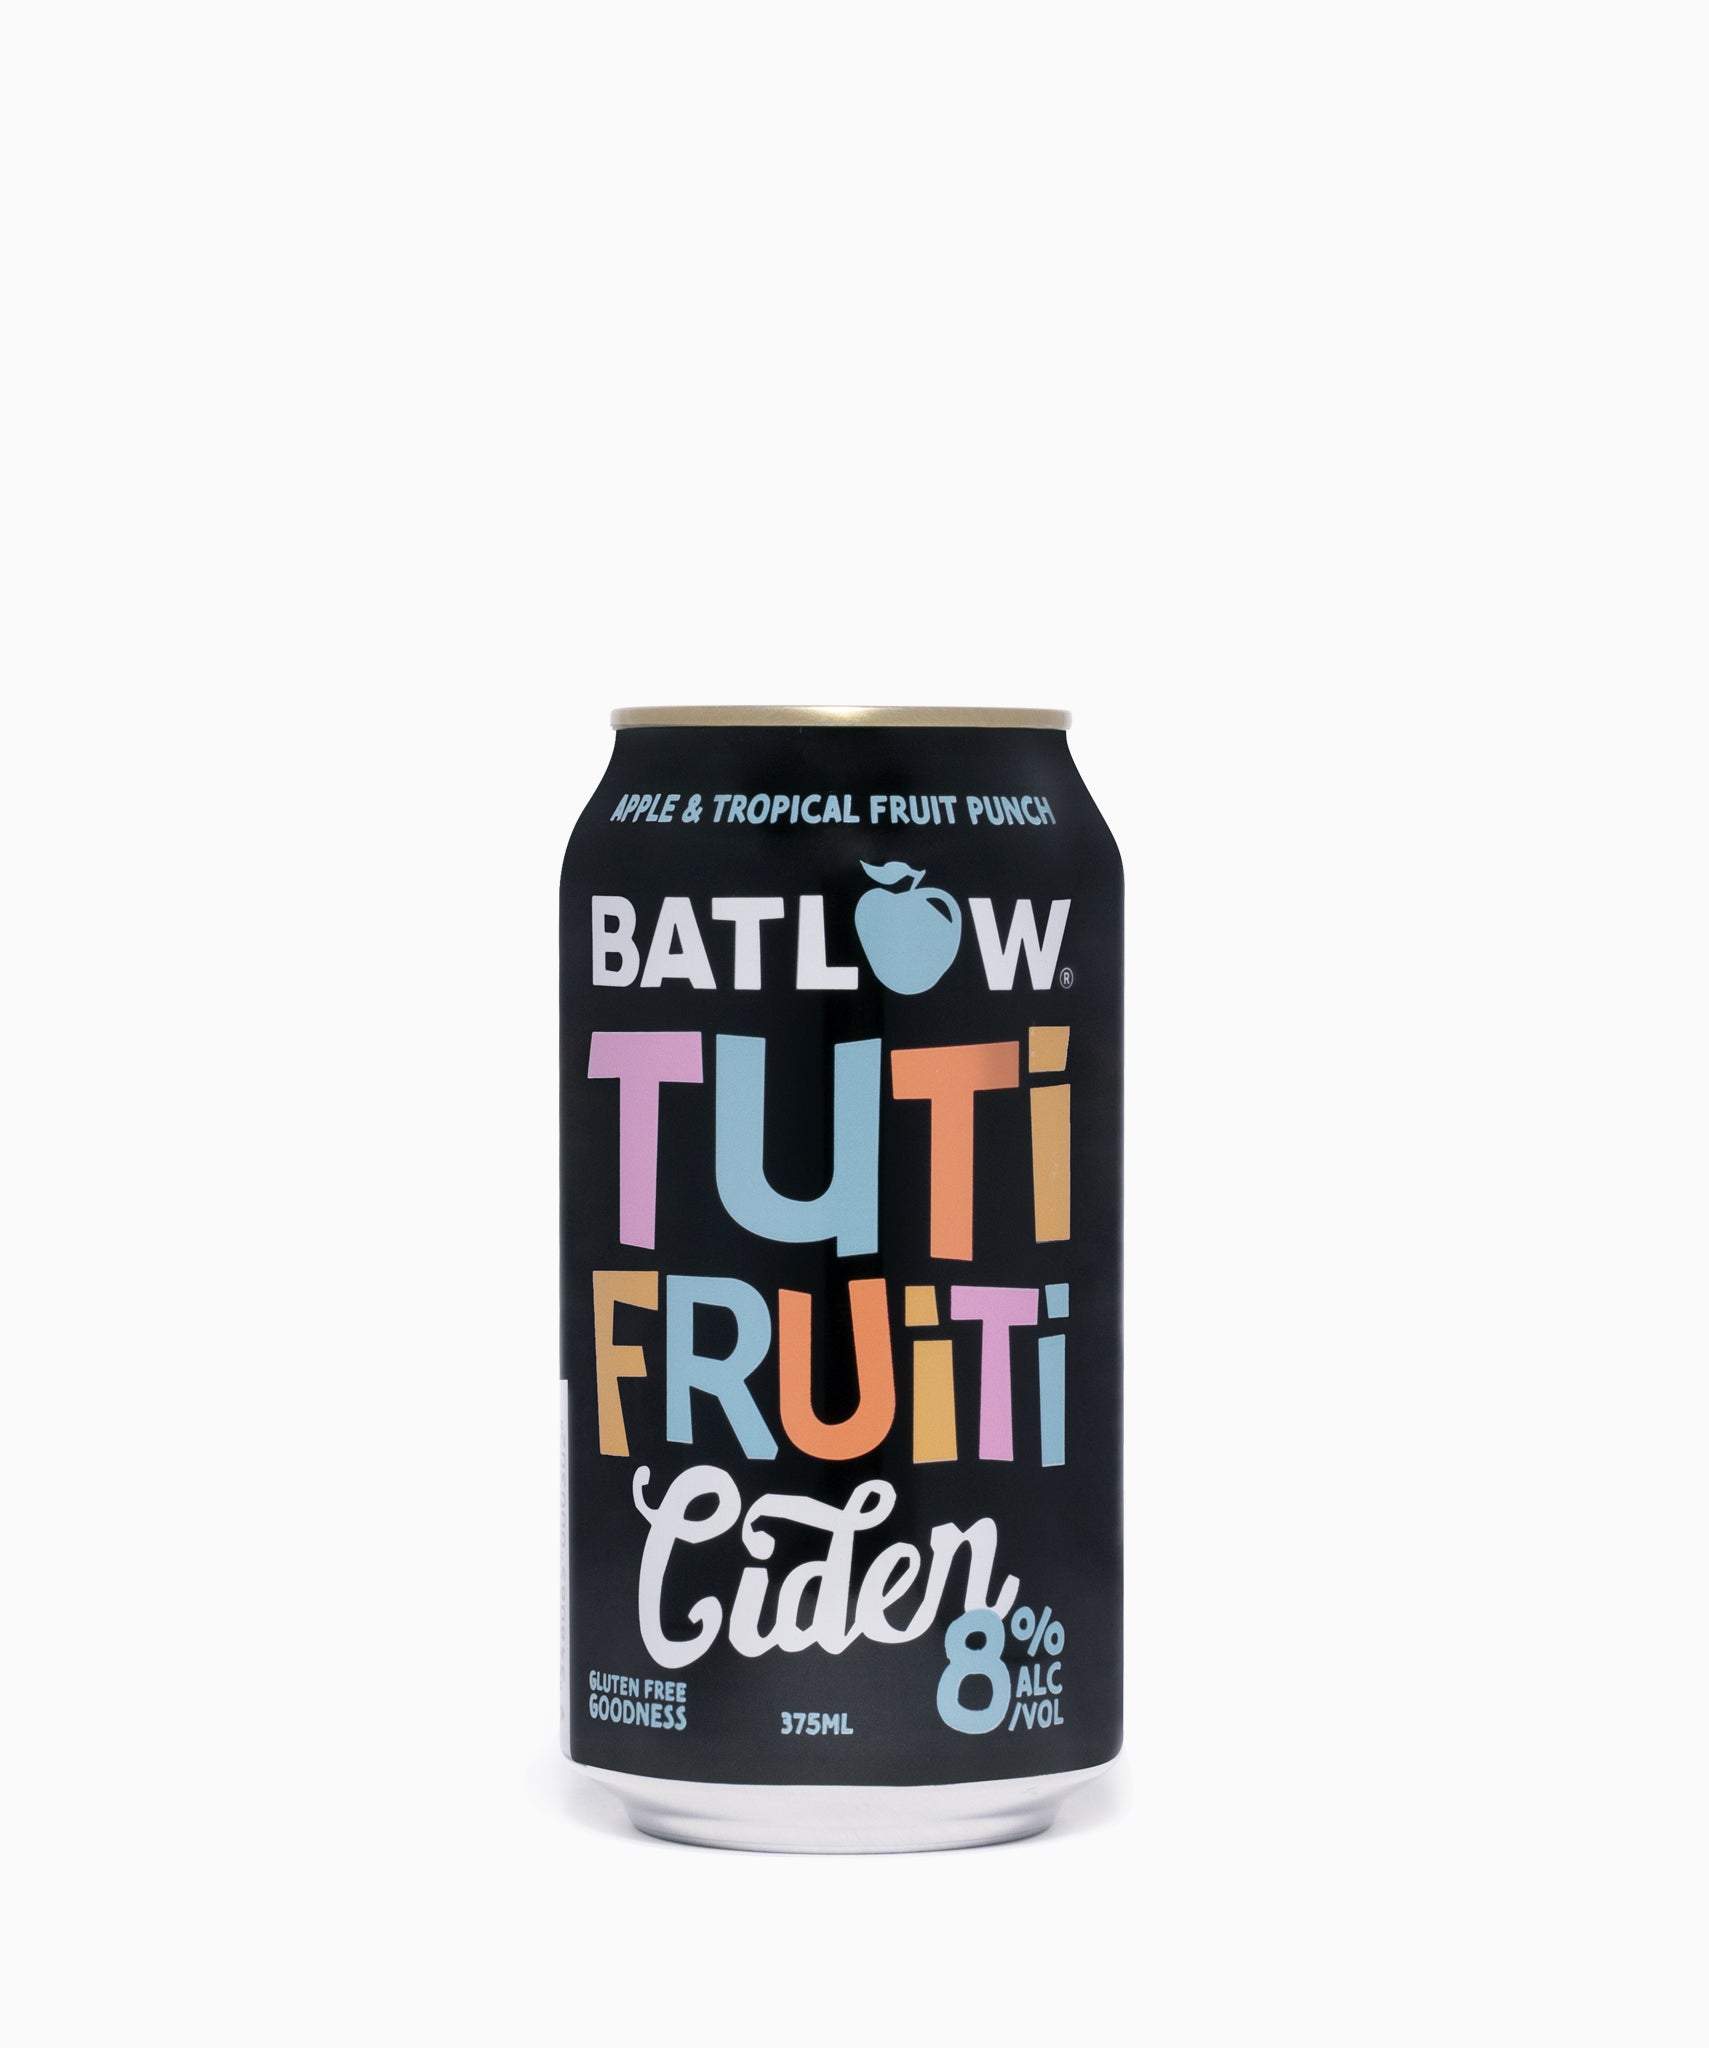 Batlow Tuti Fruiti Cider Cans - Case (24 x 375mL)